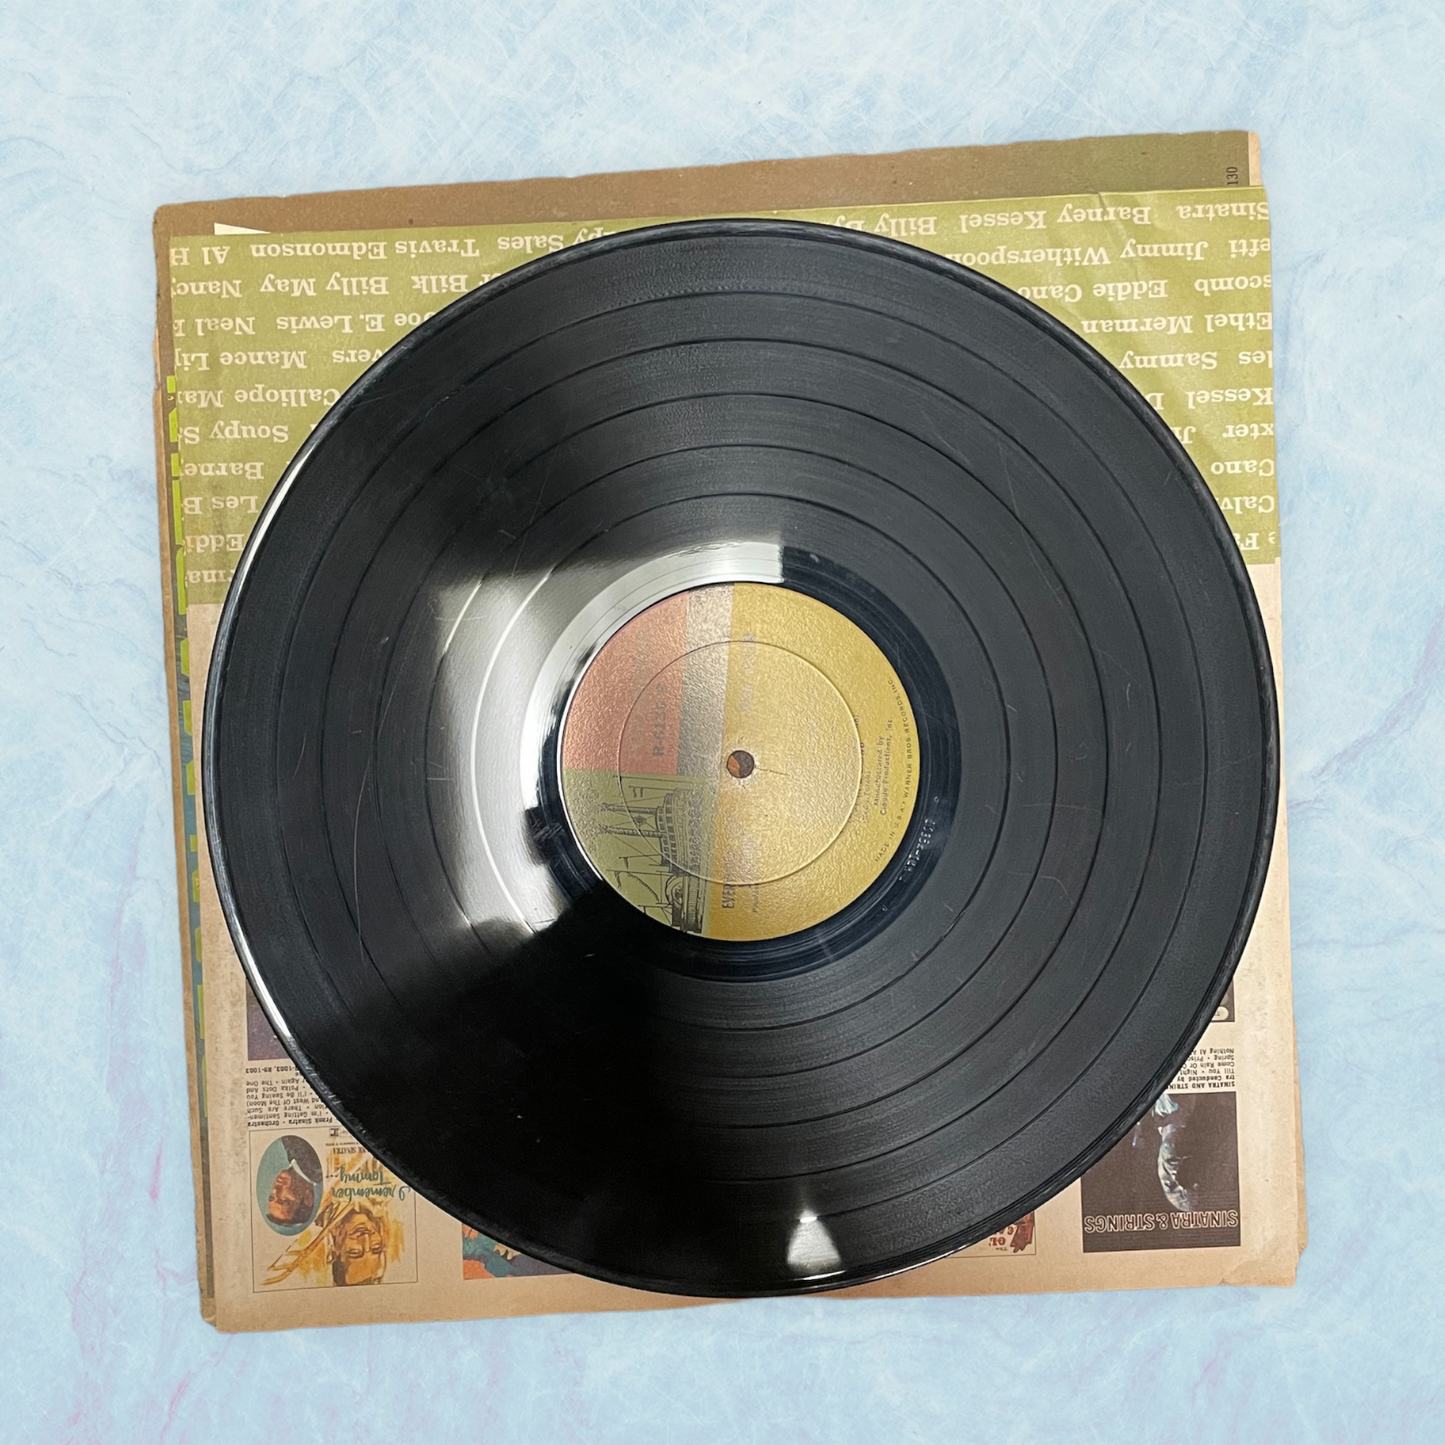 DEAN MARTIN EVERYBODY LOVES SOMEBODY VINYL RECORD LP / REPRISE RECORDS